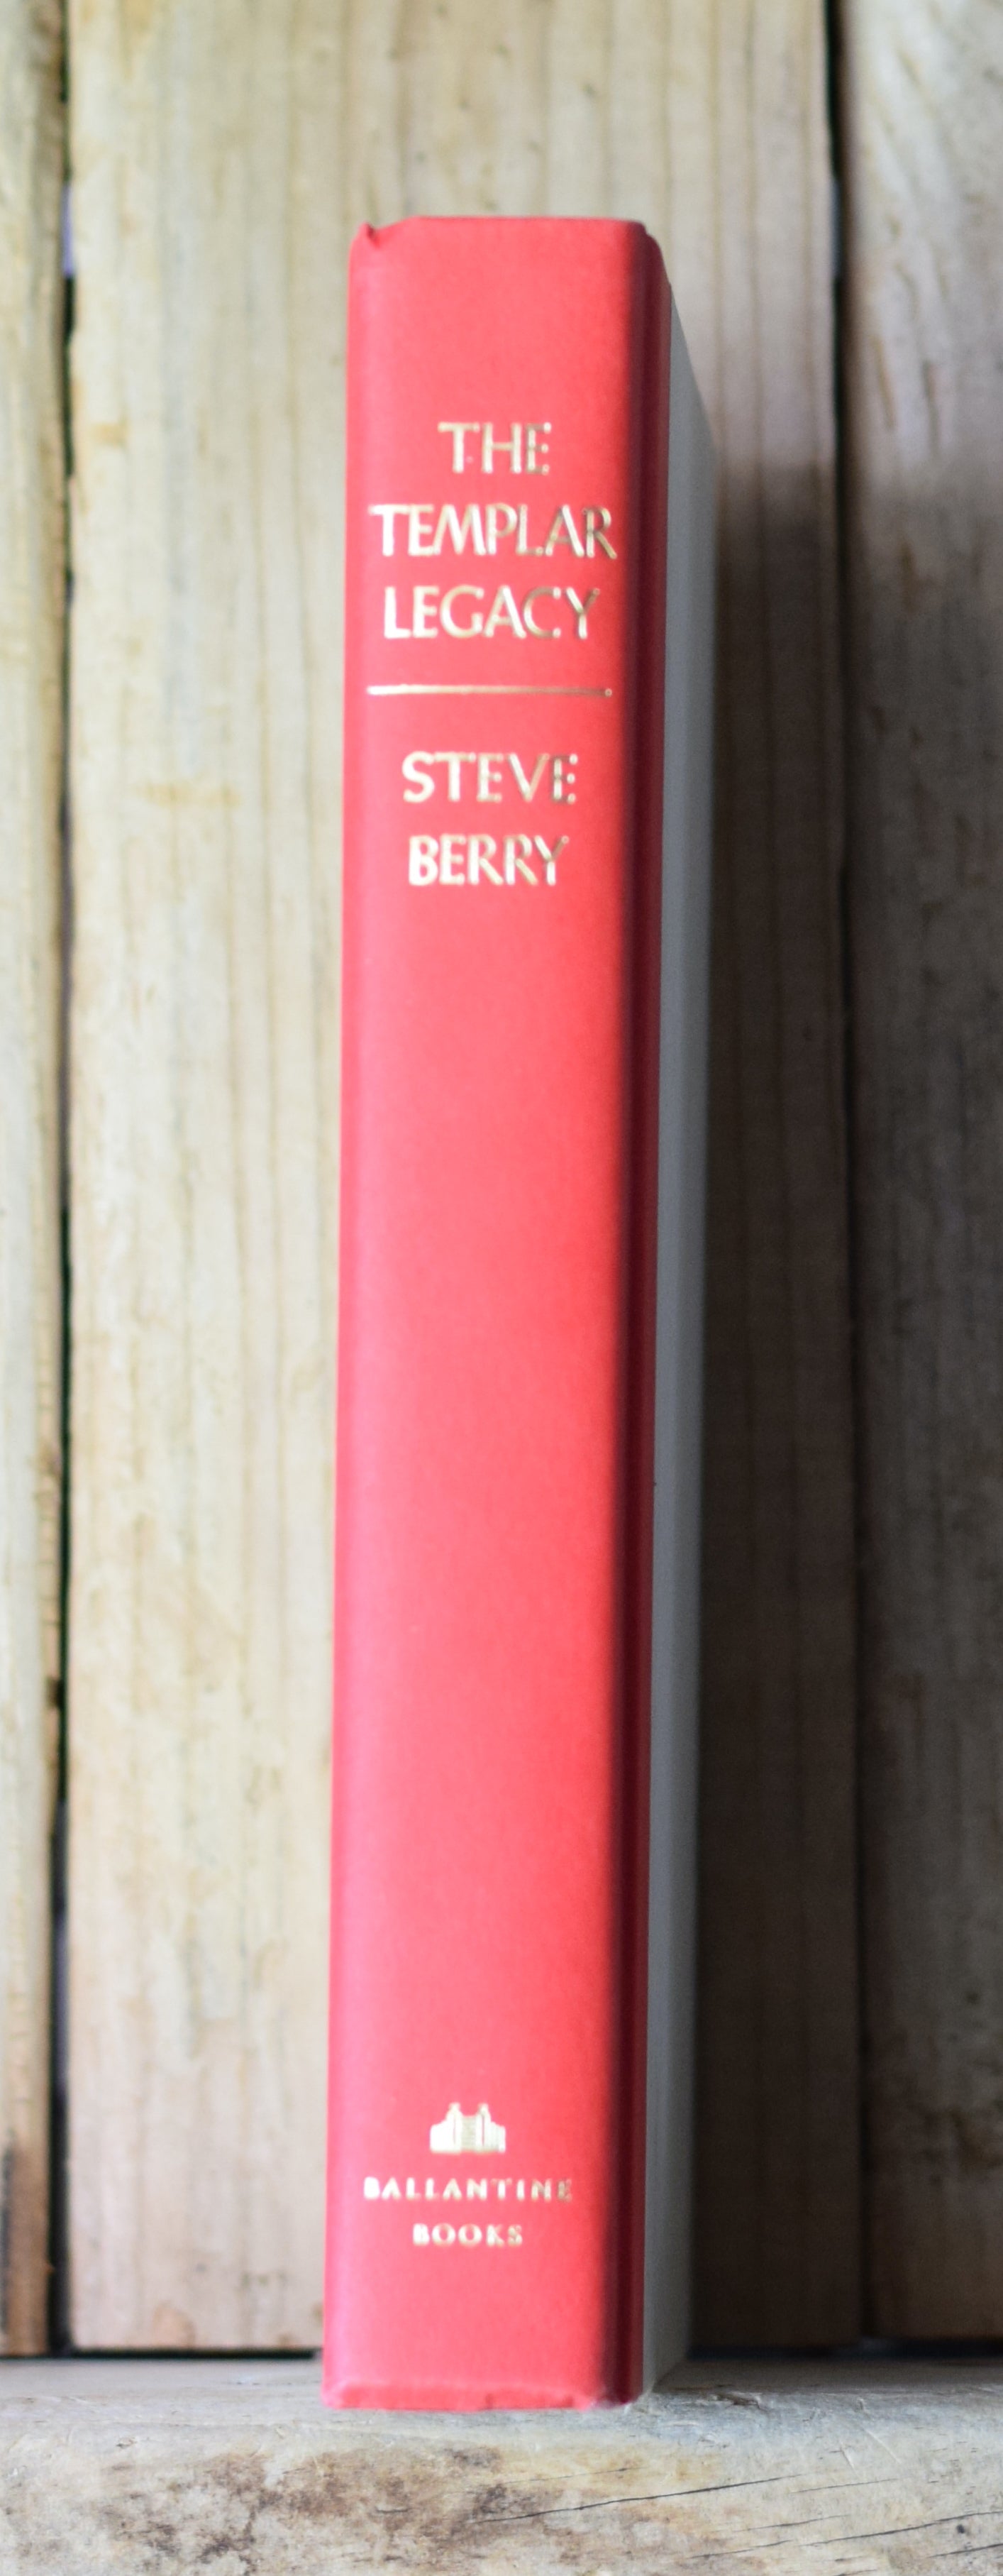 Fiction Hardback: Steve Berry - The Templar Legacy SIGNED FIRST PRINT/EDITION